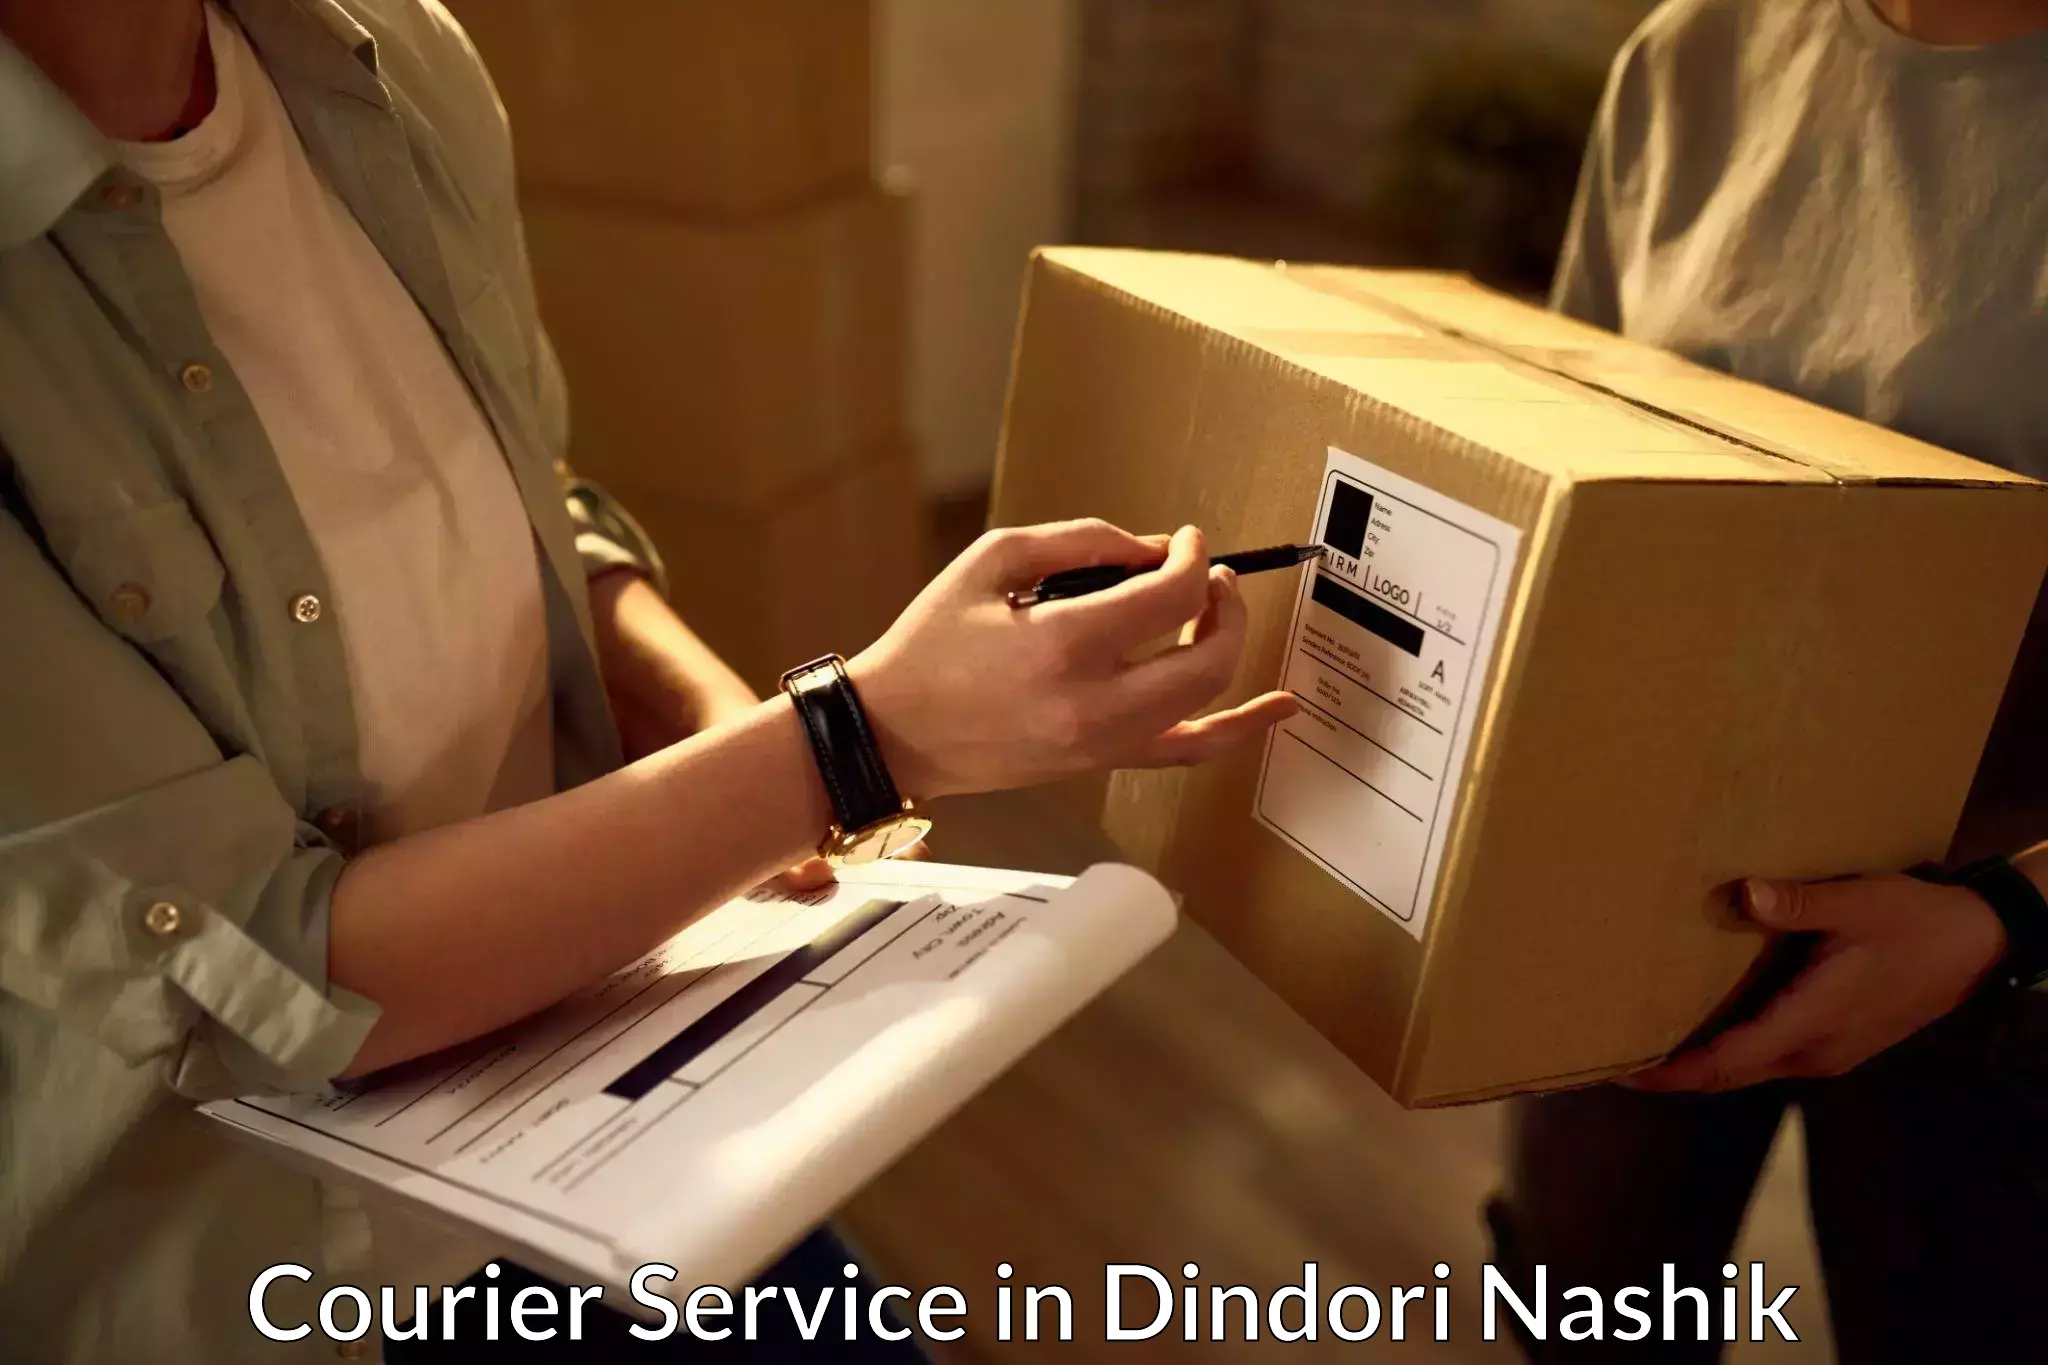 Optimized delivery routes in Dindori Nashik